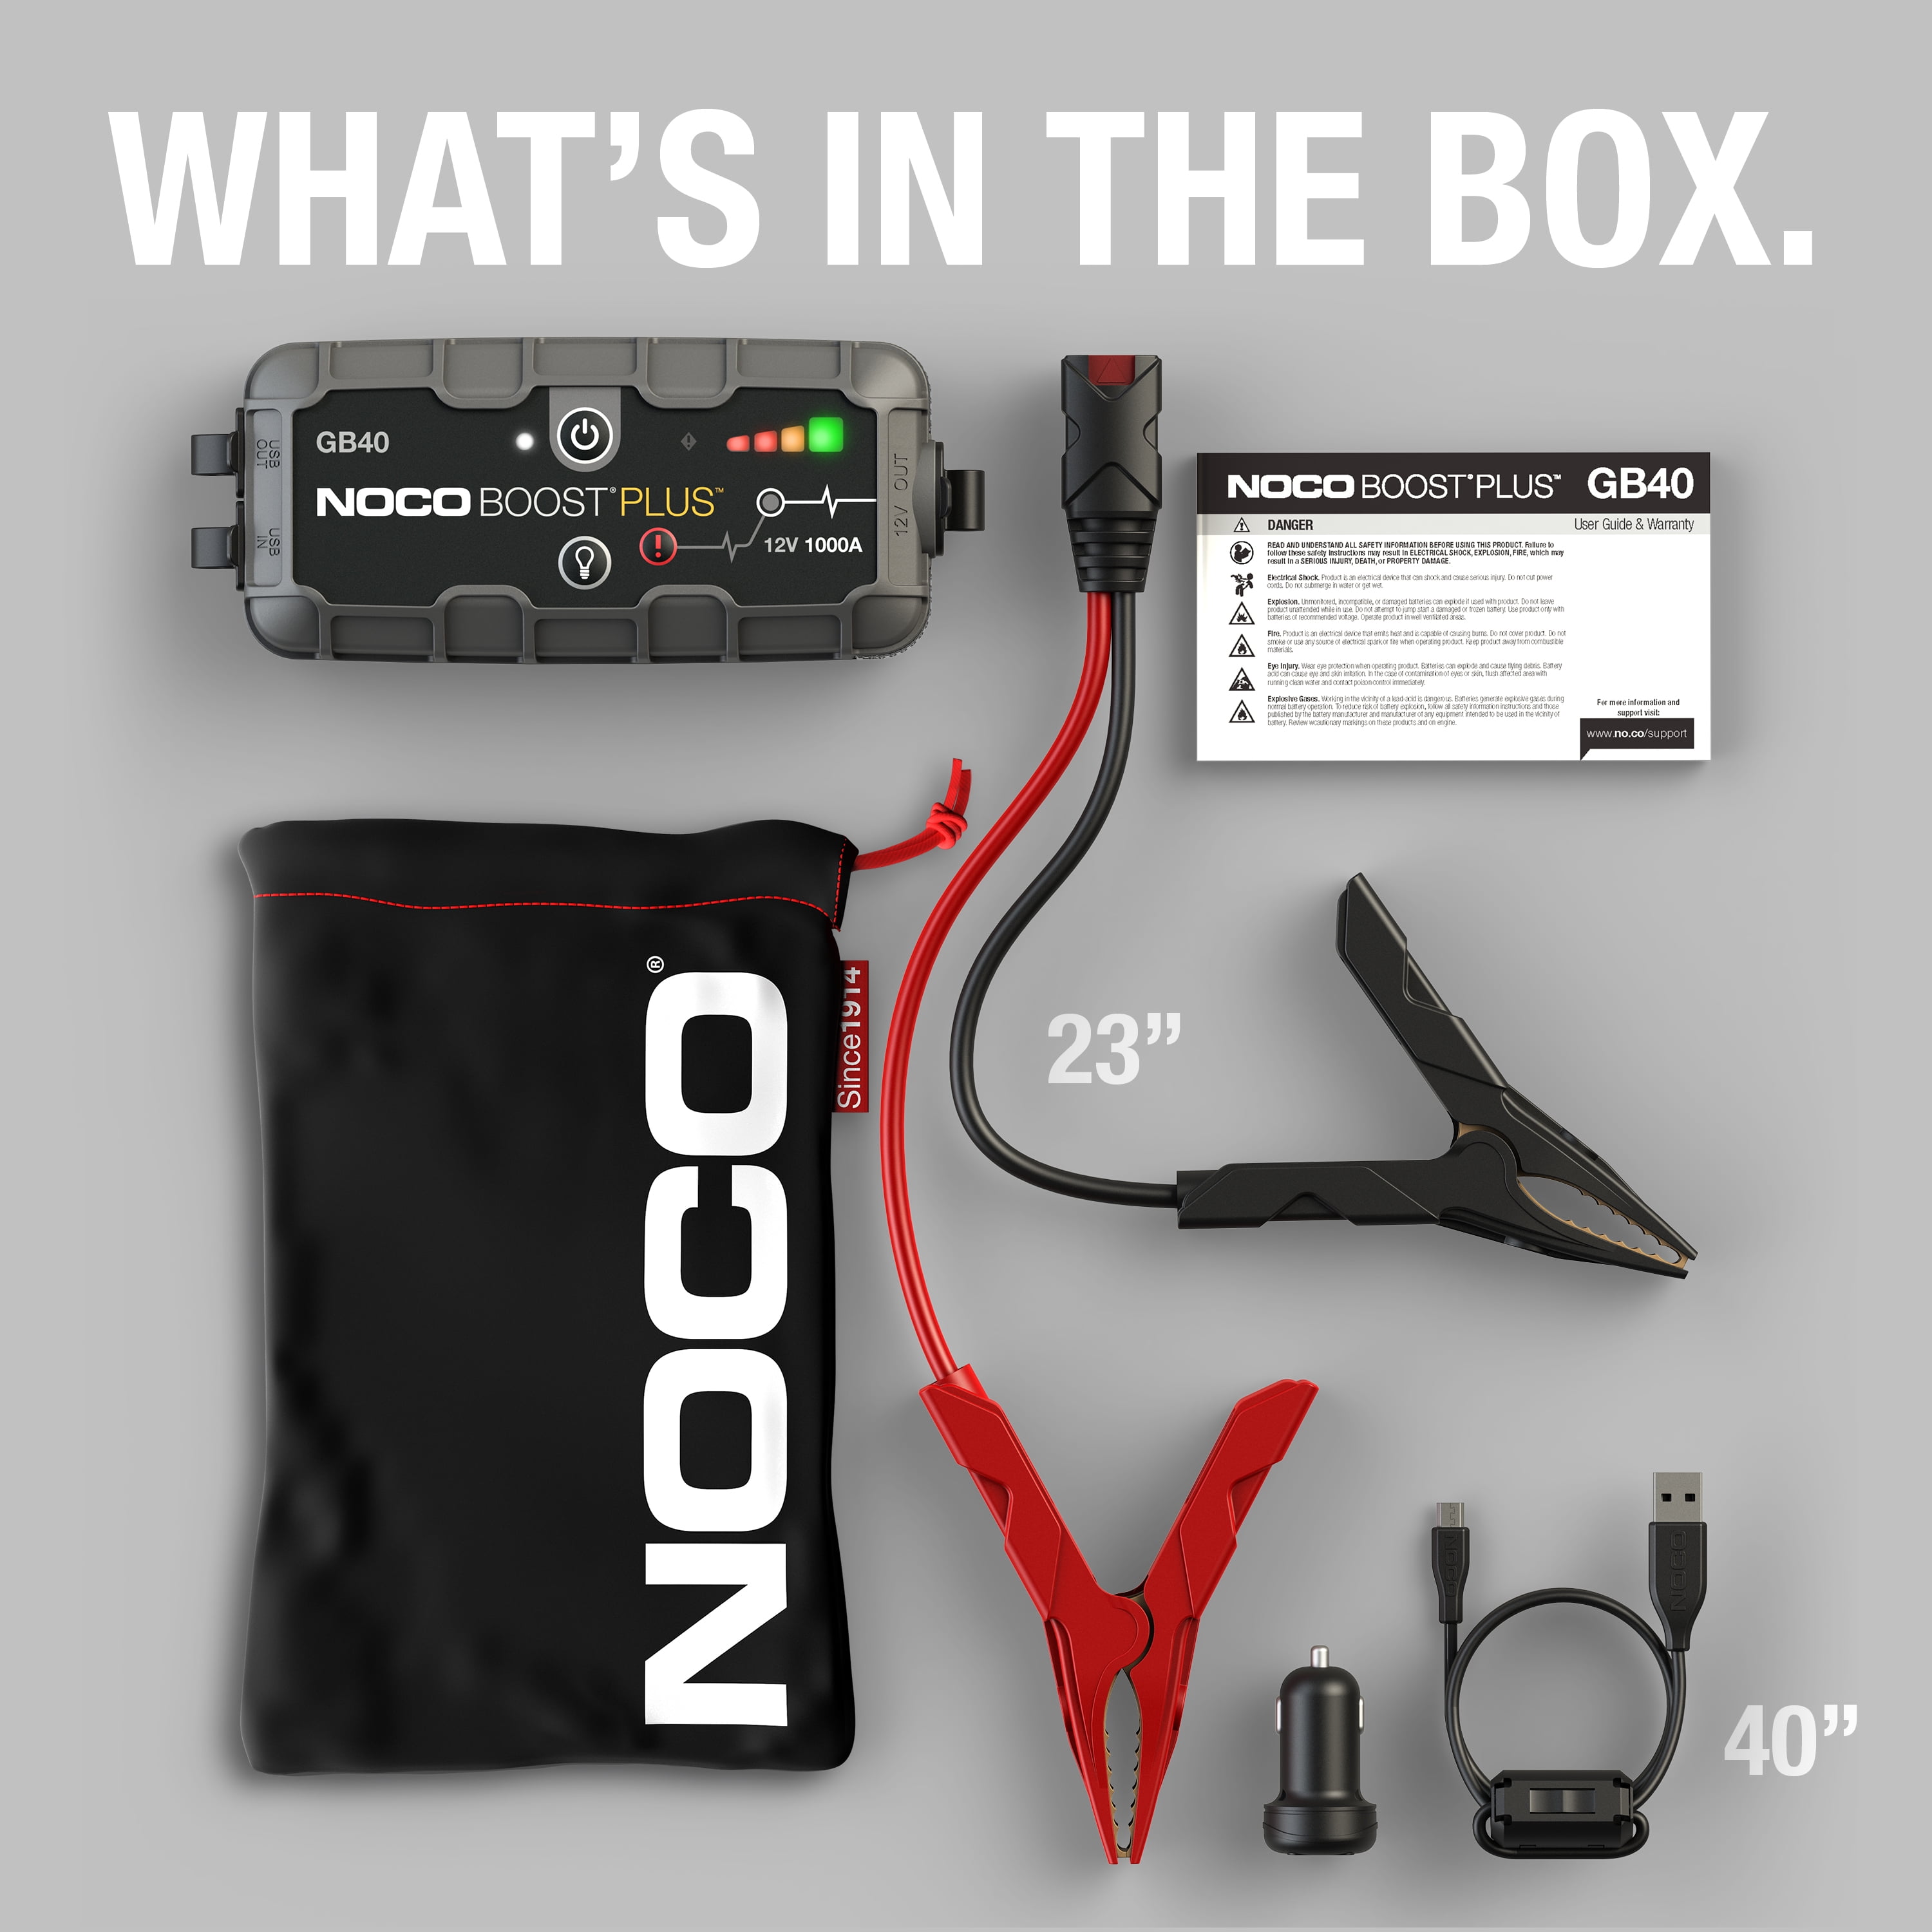 NOCO Boost Plus GB40 1000A 12V UltraSafe Portable Lithium Jump